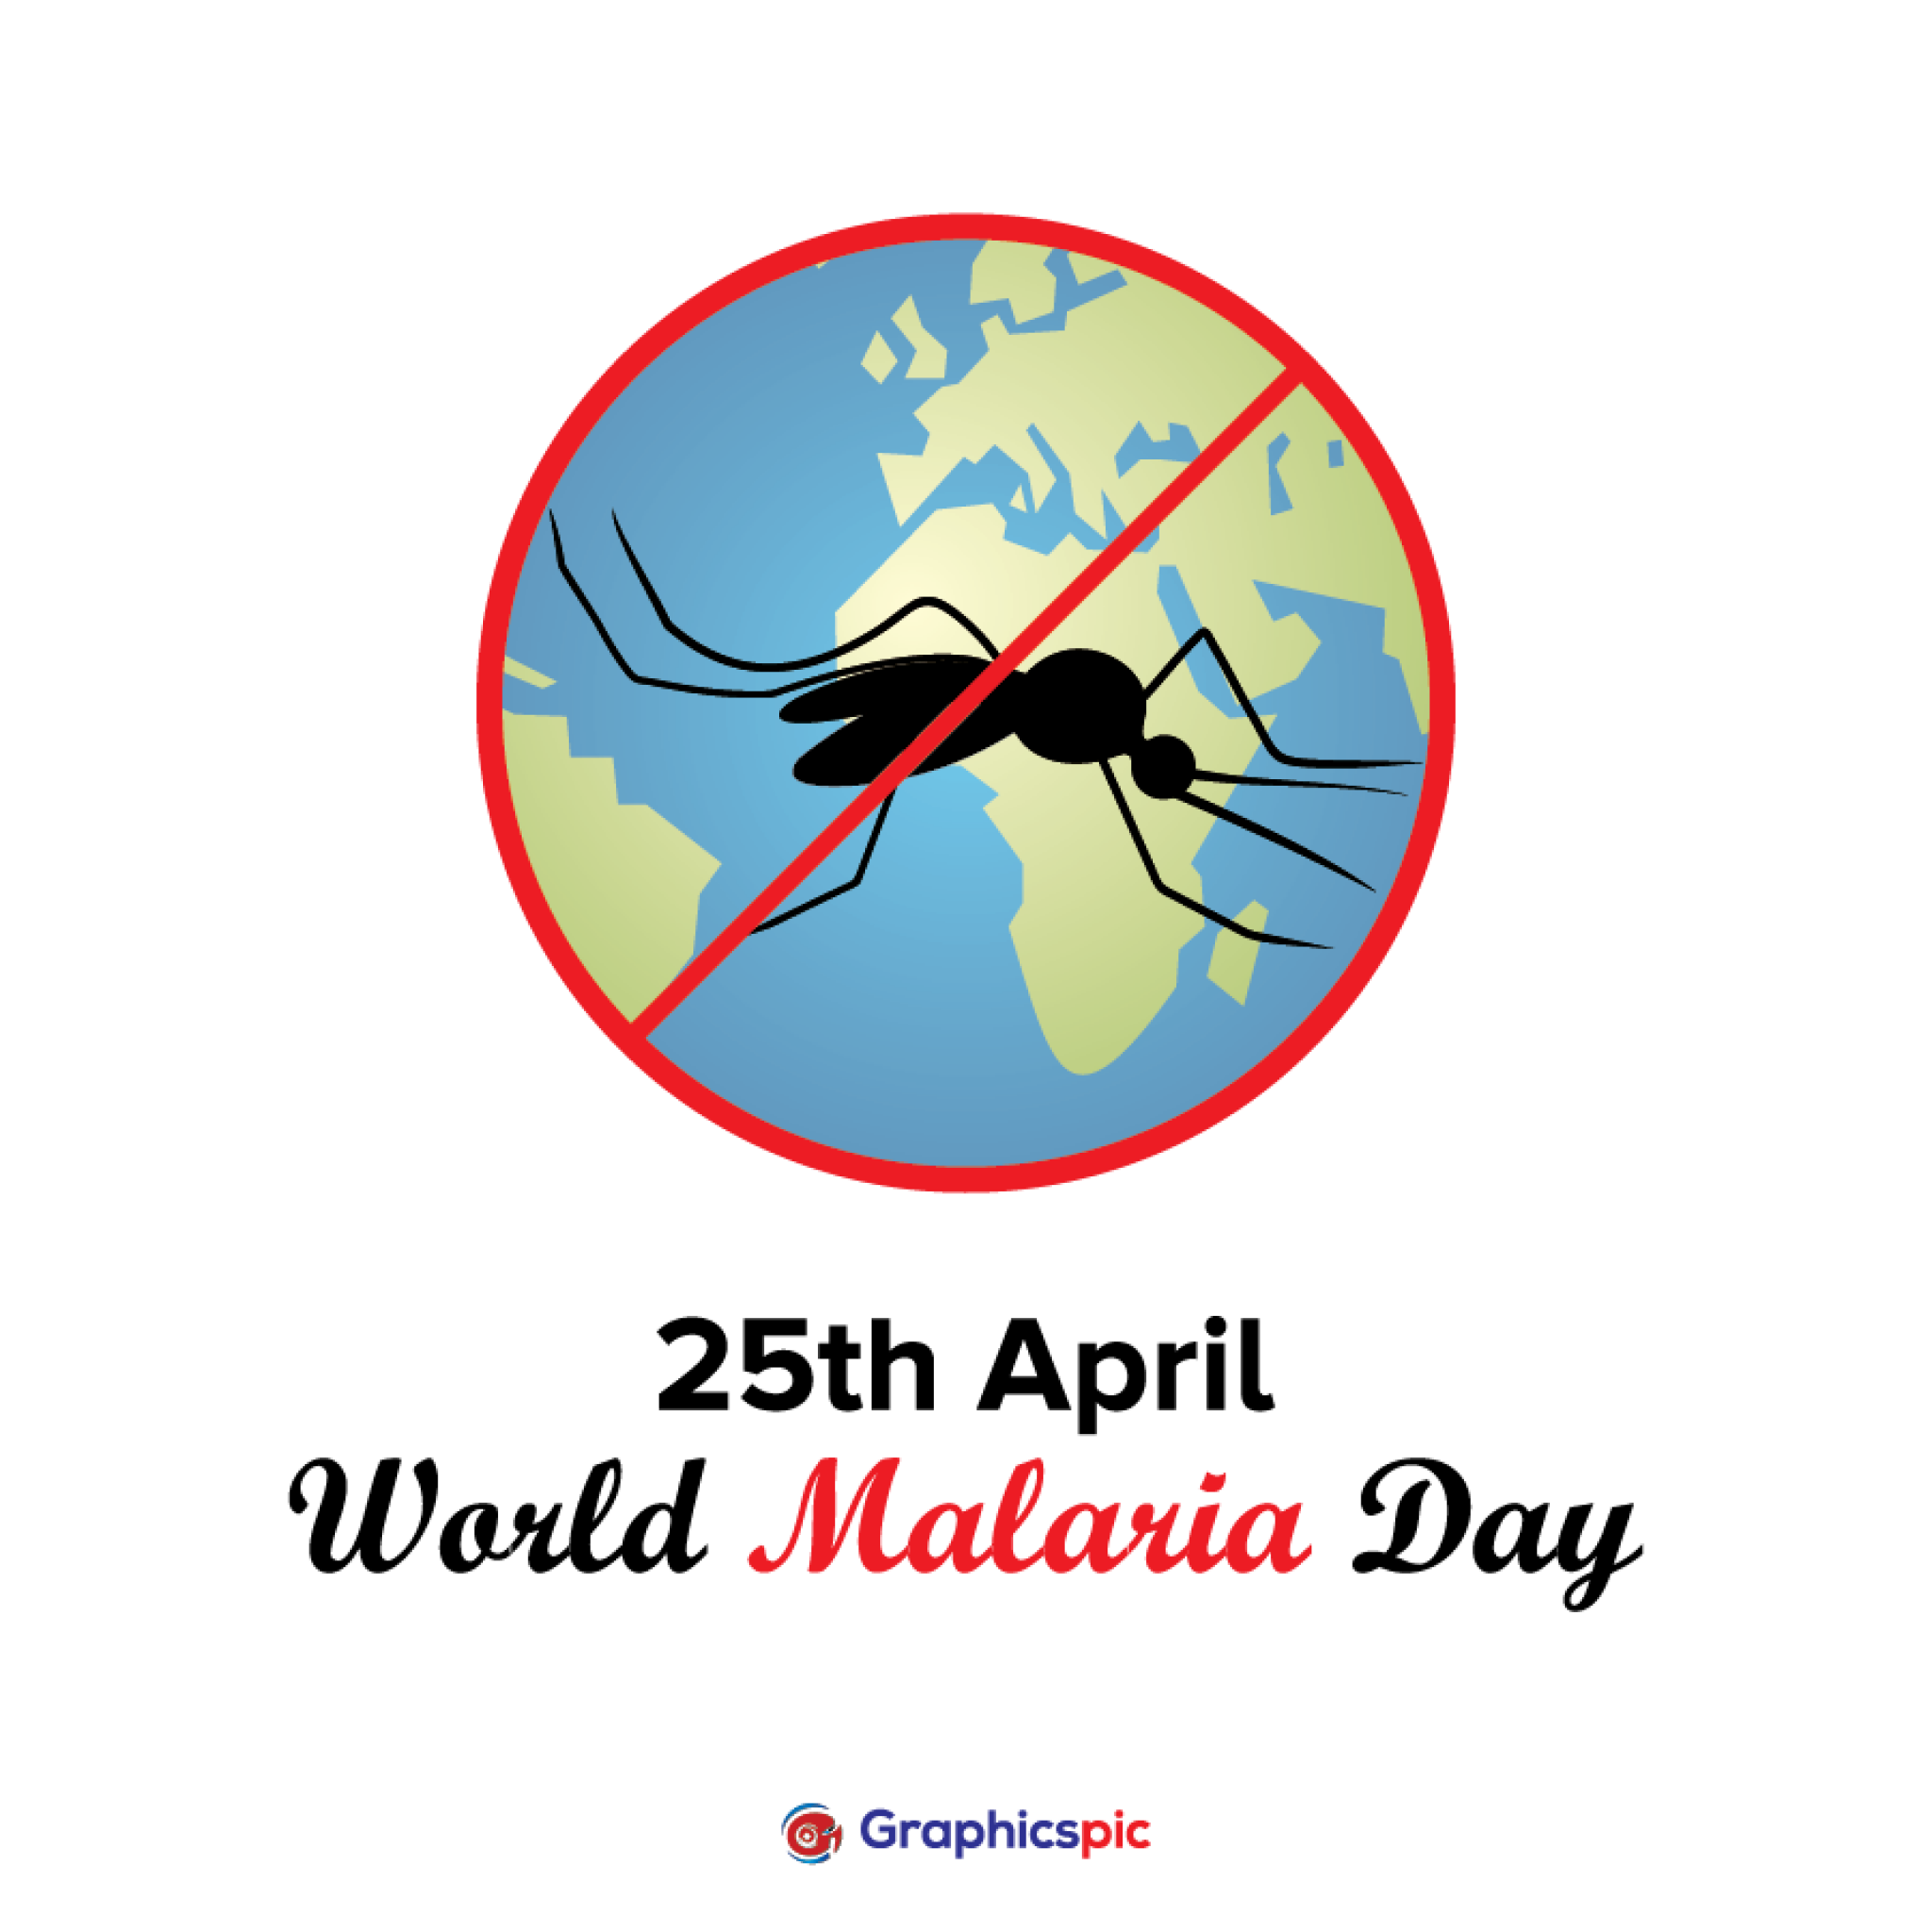 World Malaria Day logo icon design illustration free vector